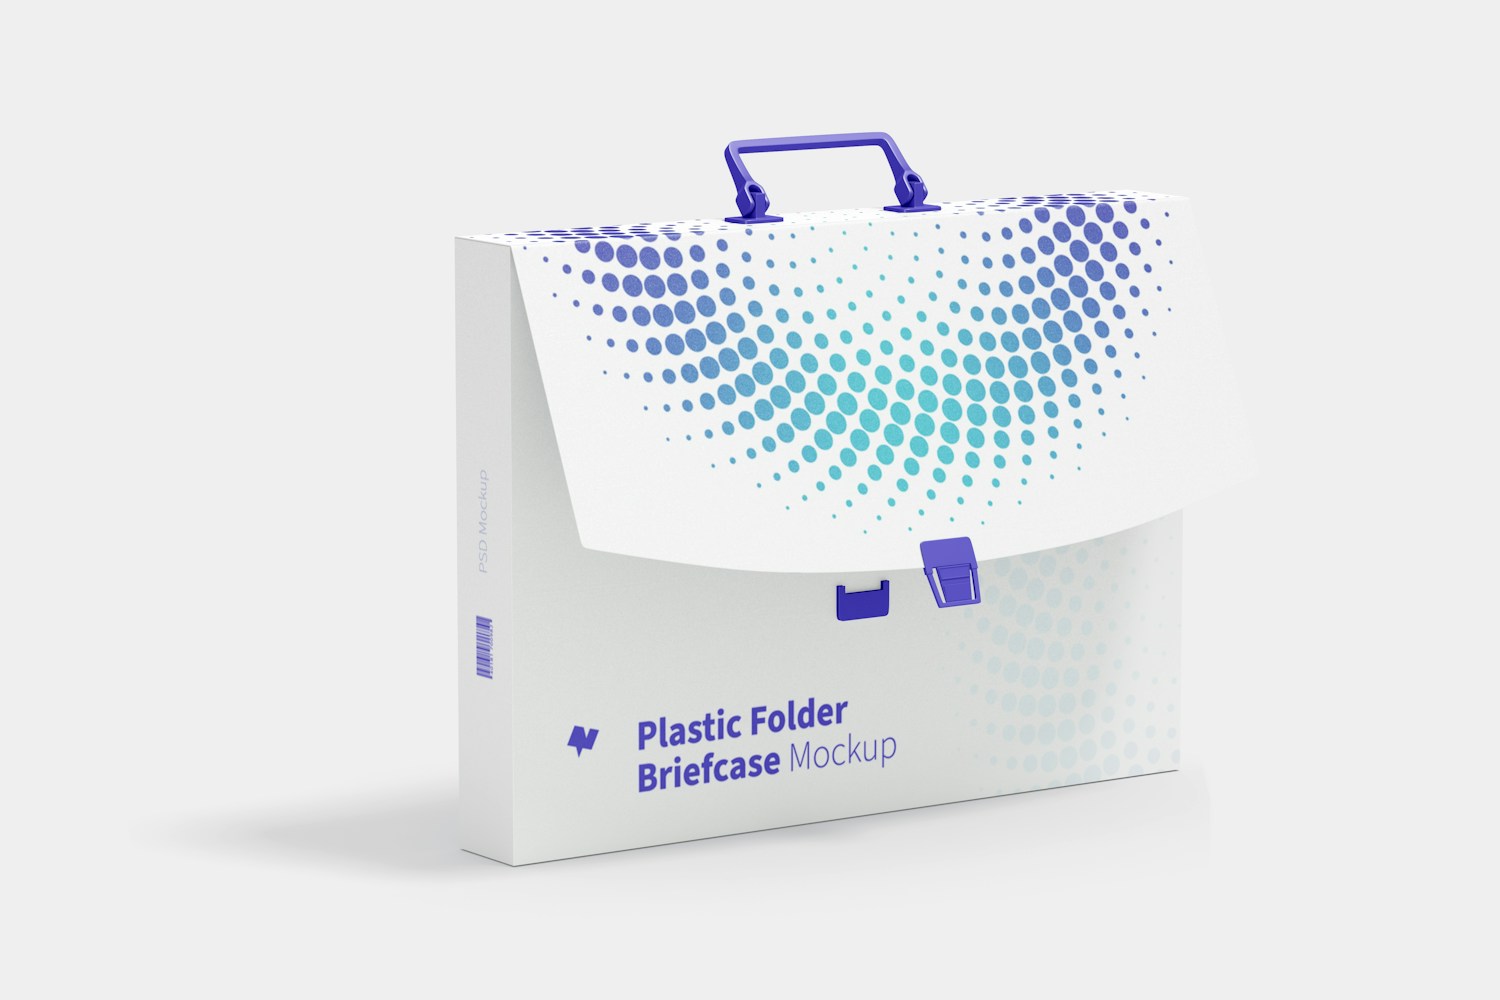 Plastic Folder Briefcase Mockup